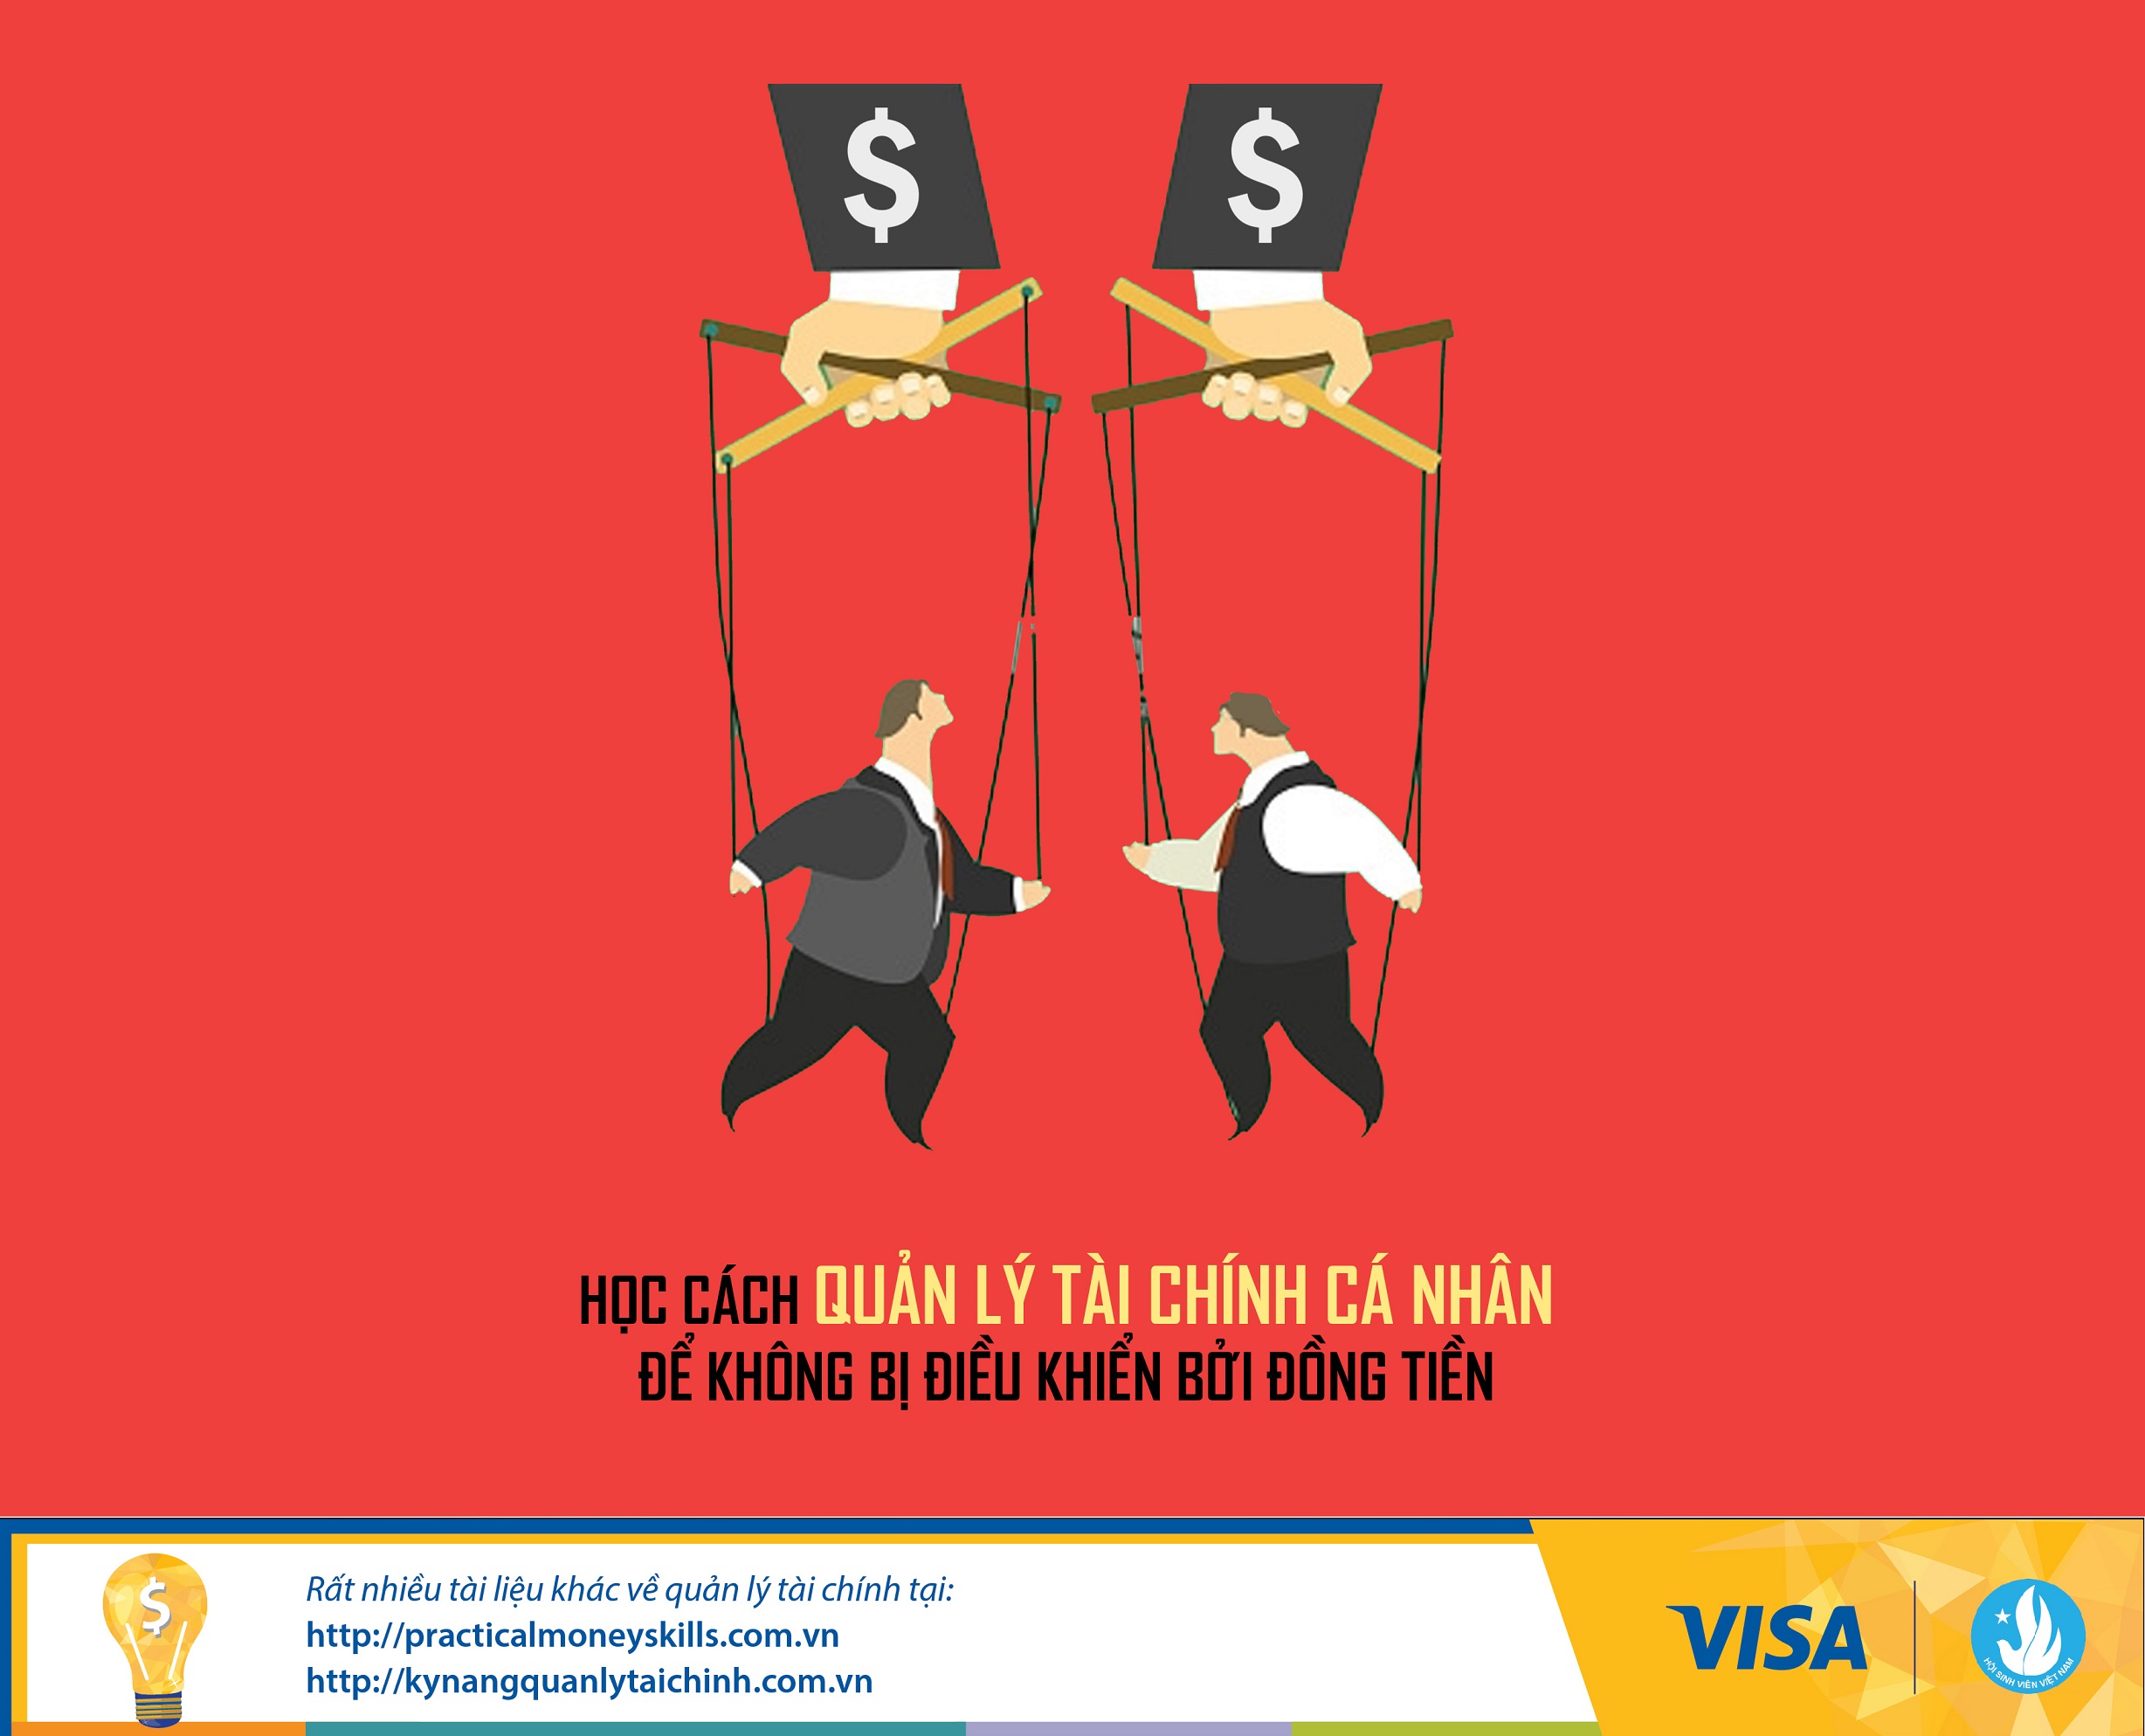 Visa’s national “Practical Money Skills” art exhibition hits the road in Vietnam